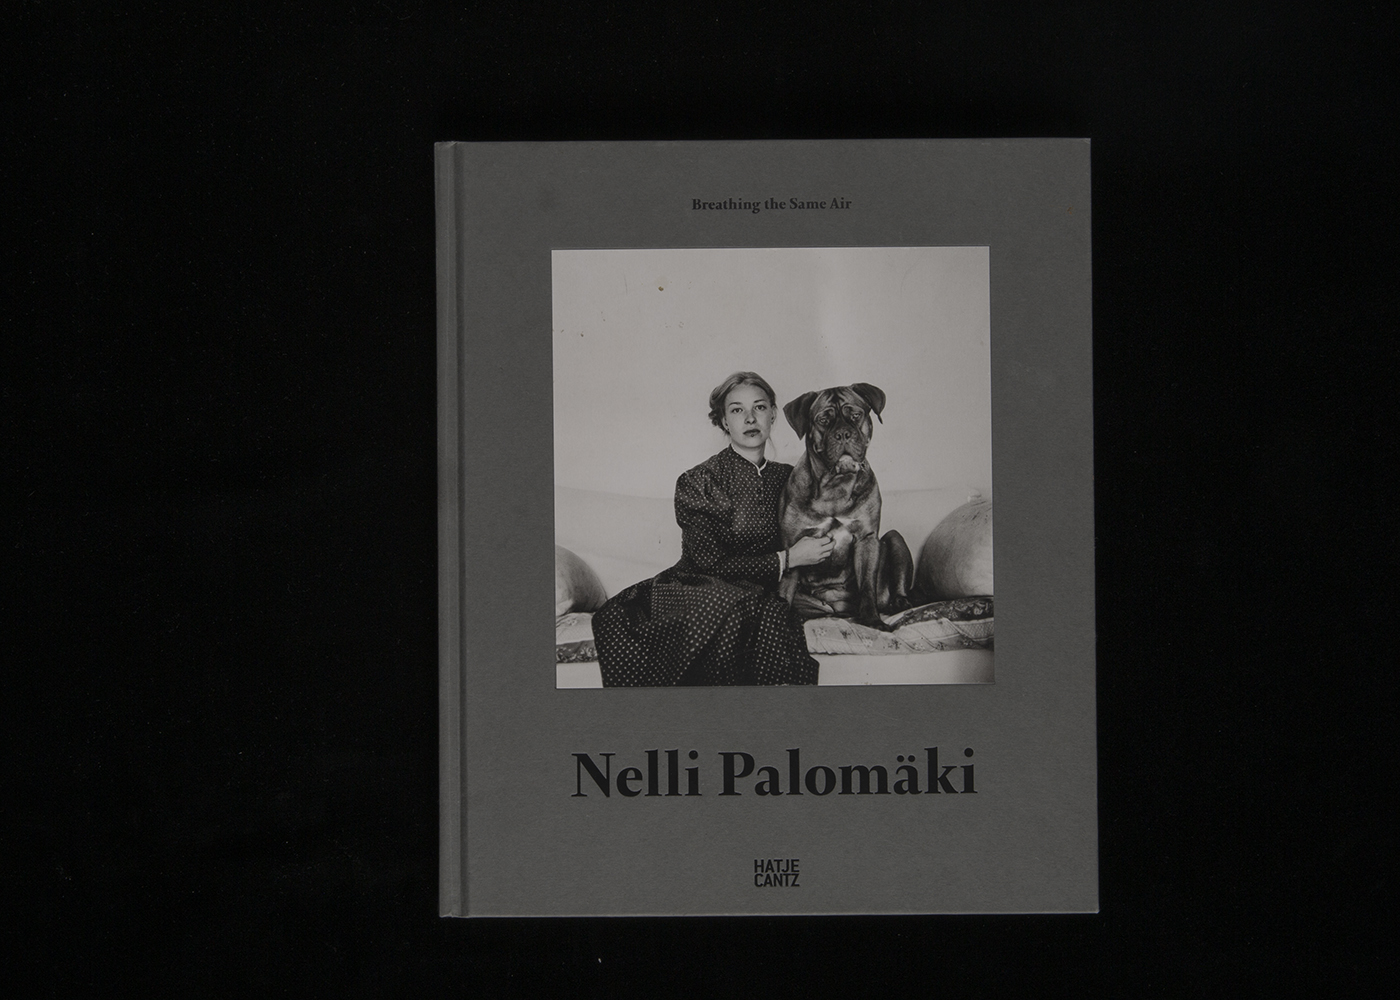 BREATHING THE SAME AIR — Nelli Palomäki - Archive